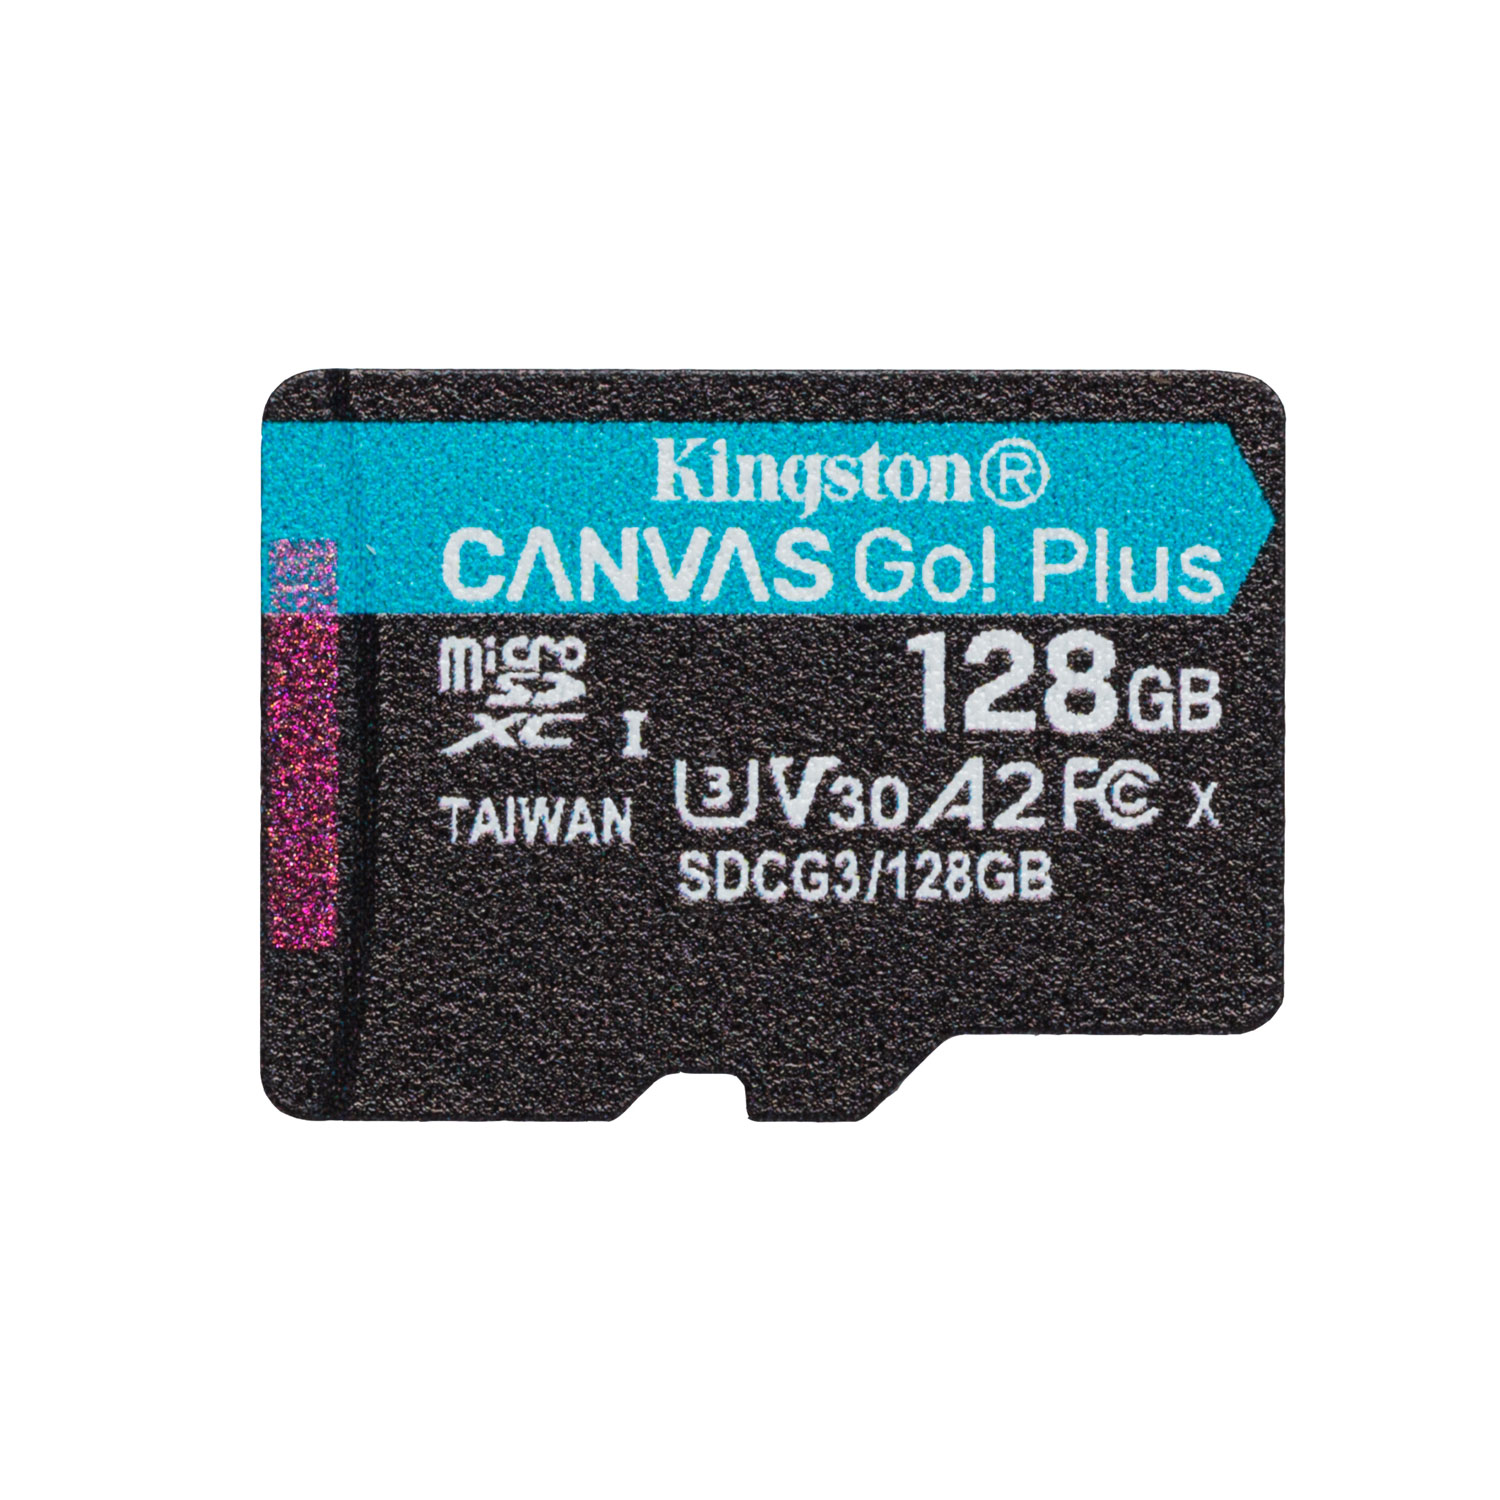 Kingston Canvas Go! Plus 128GB 170MB/s microSDXC Memory Card